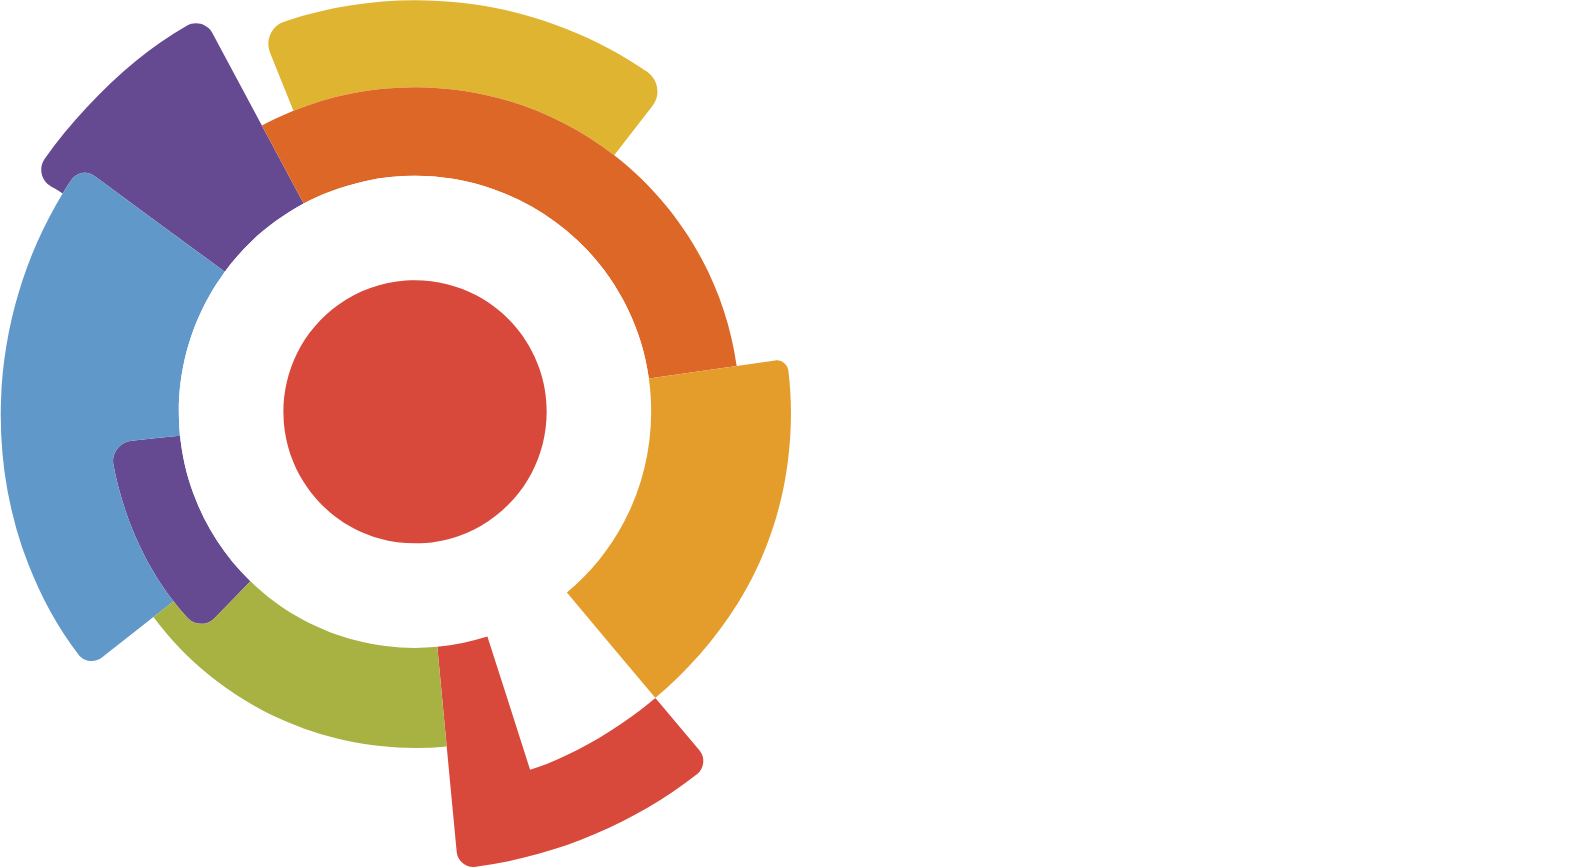 Baosheng Media Group Logo groß für dunkle Hintergründe (transparentes PNG)